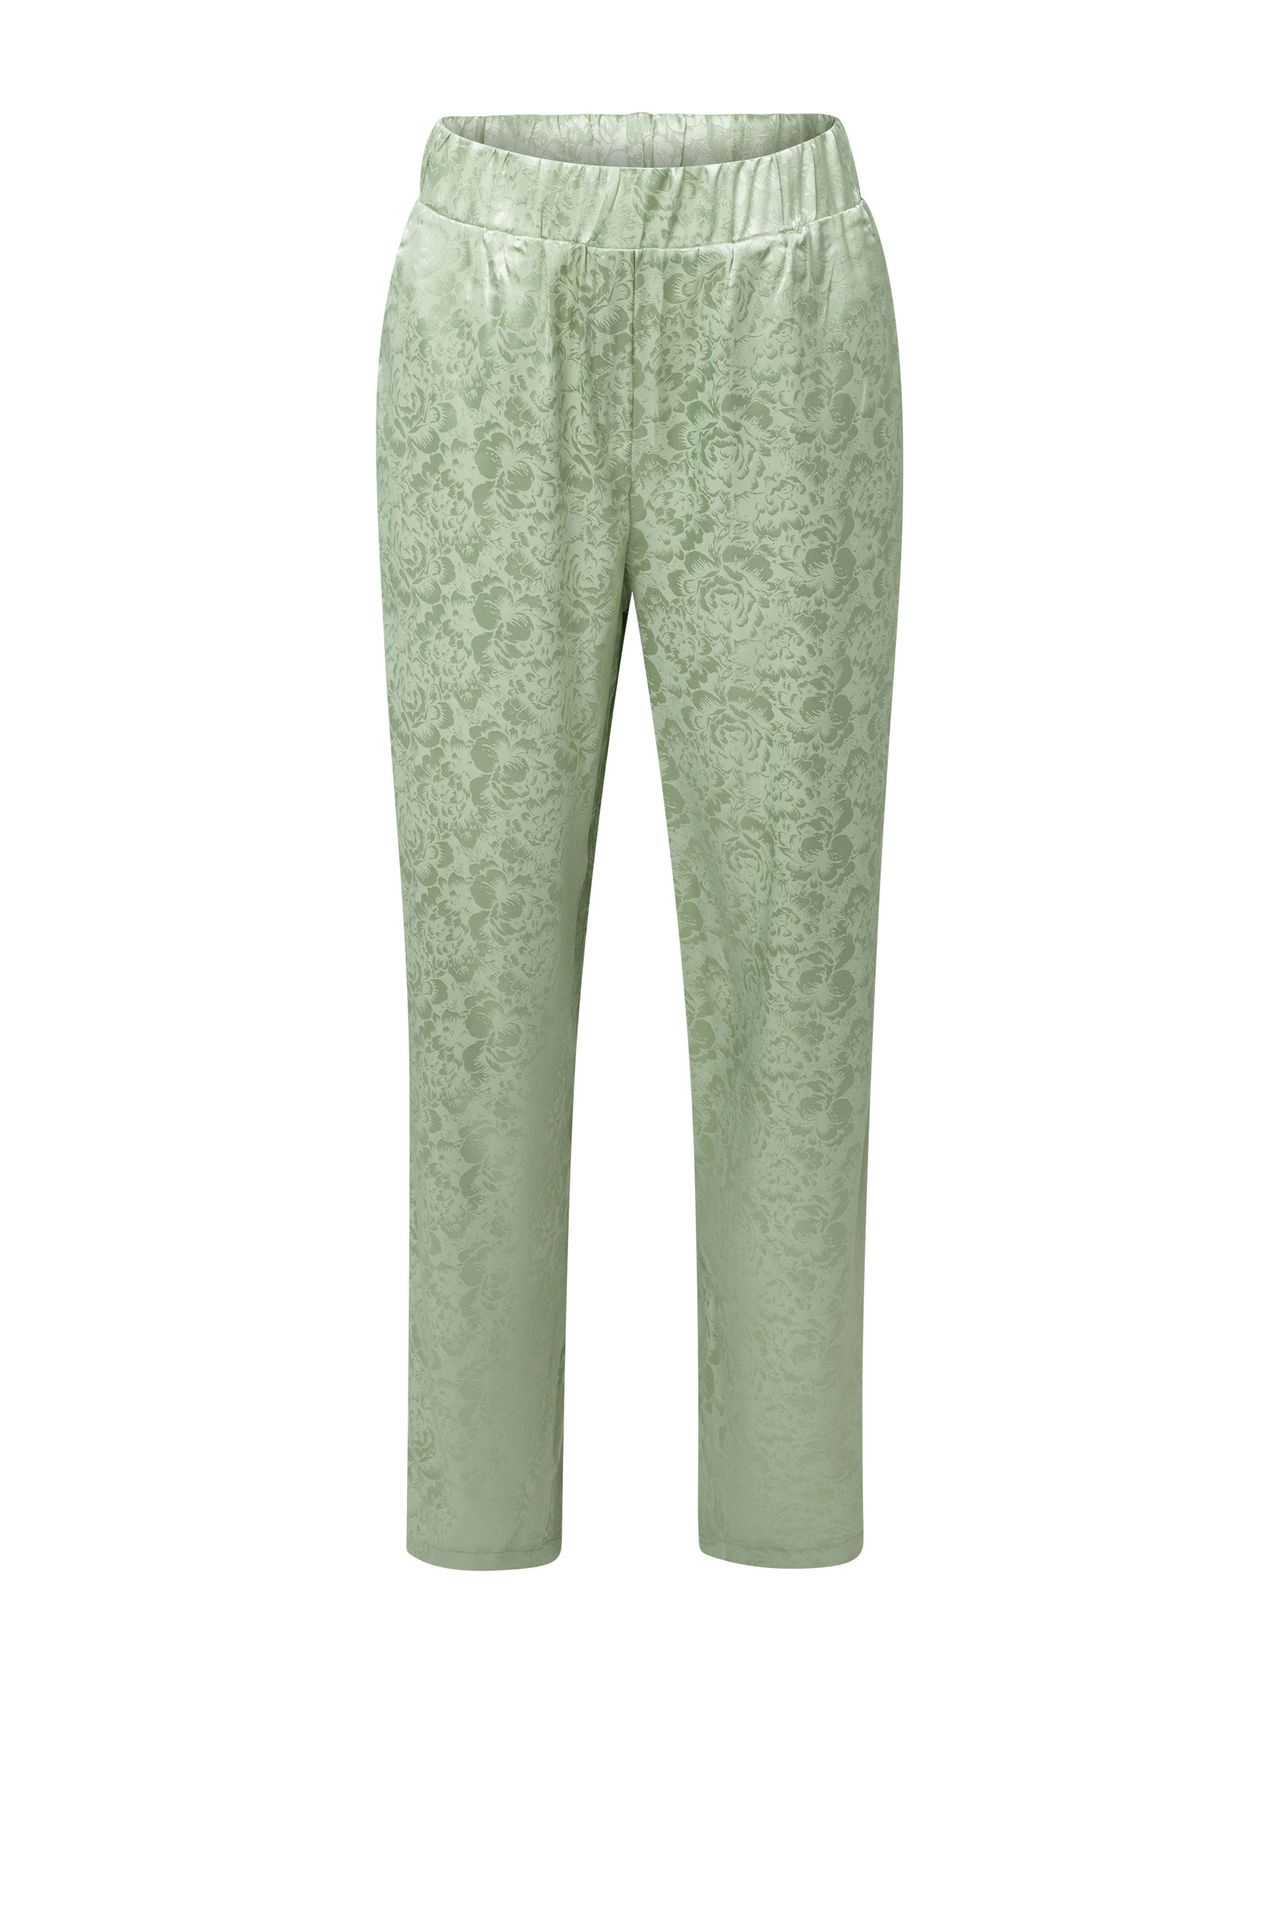 Norah Mintgroene glanzende pantalon green 214134-500